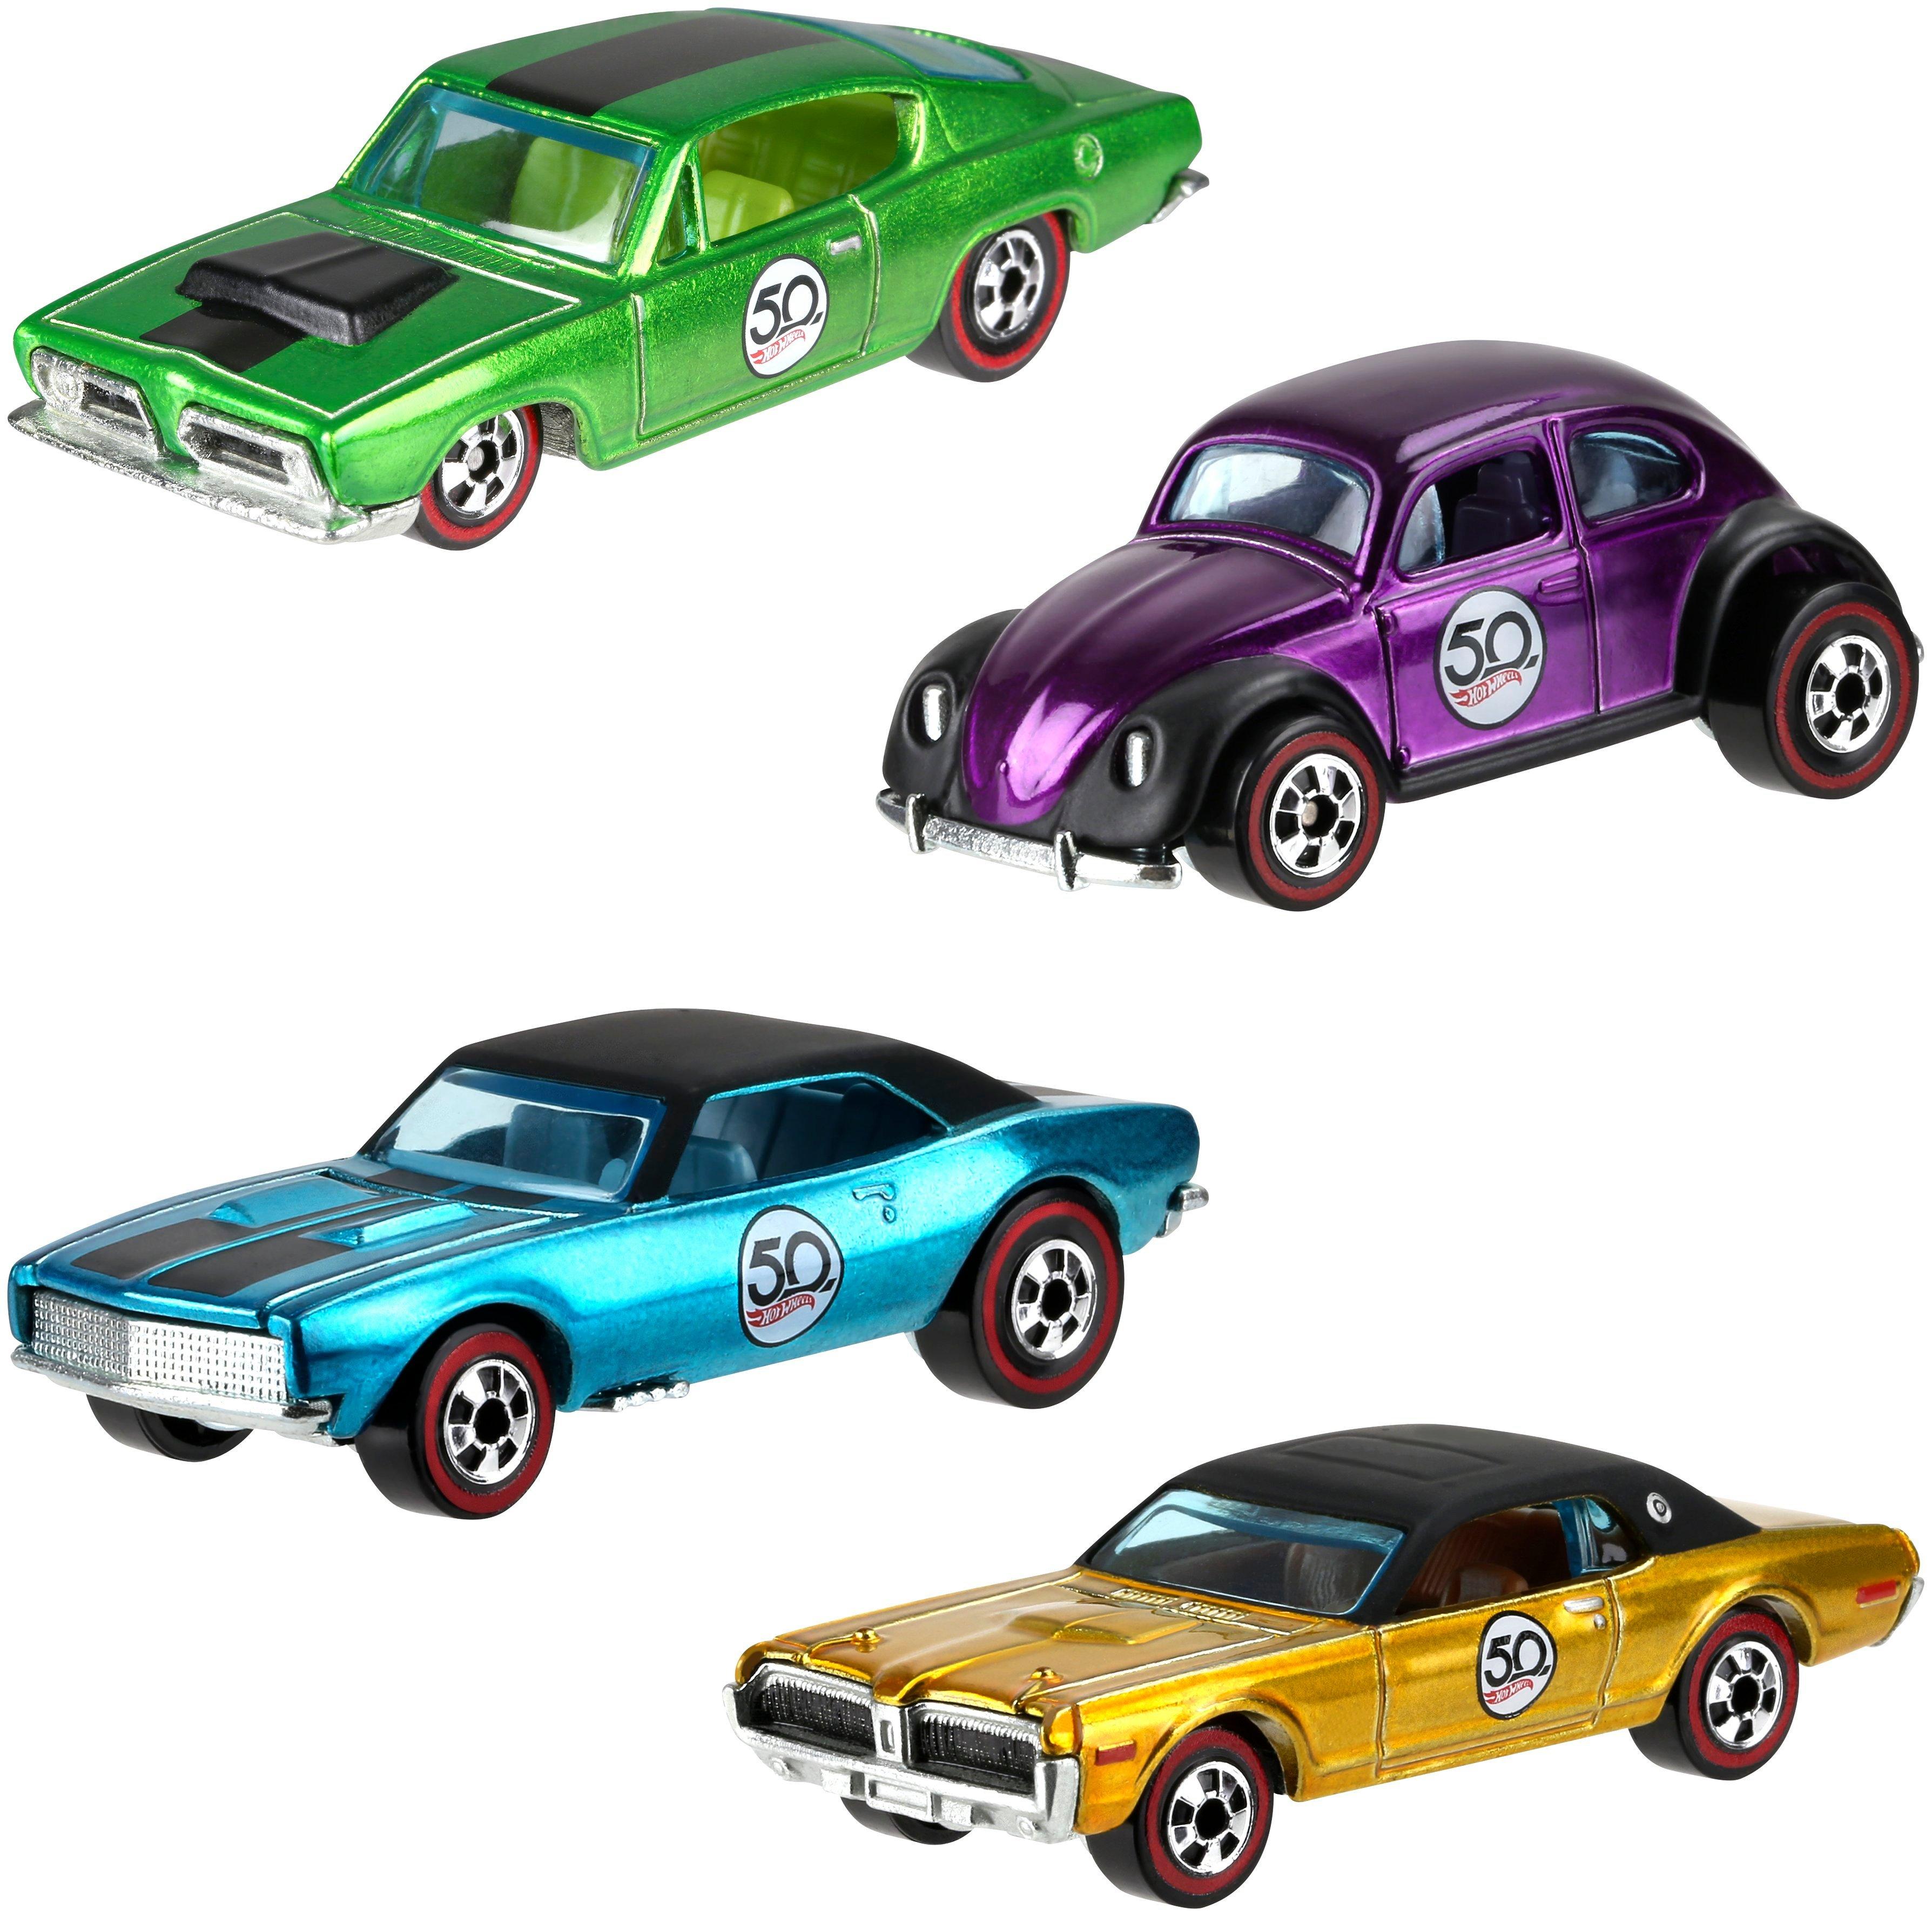 Hot Wheels 50th Anniversary Cars (Assortment) | GameStop